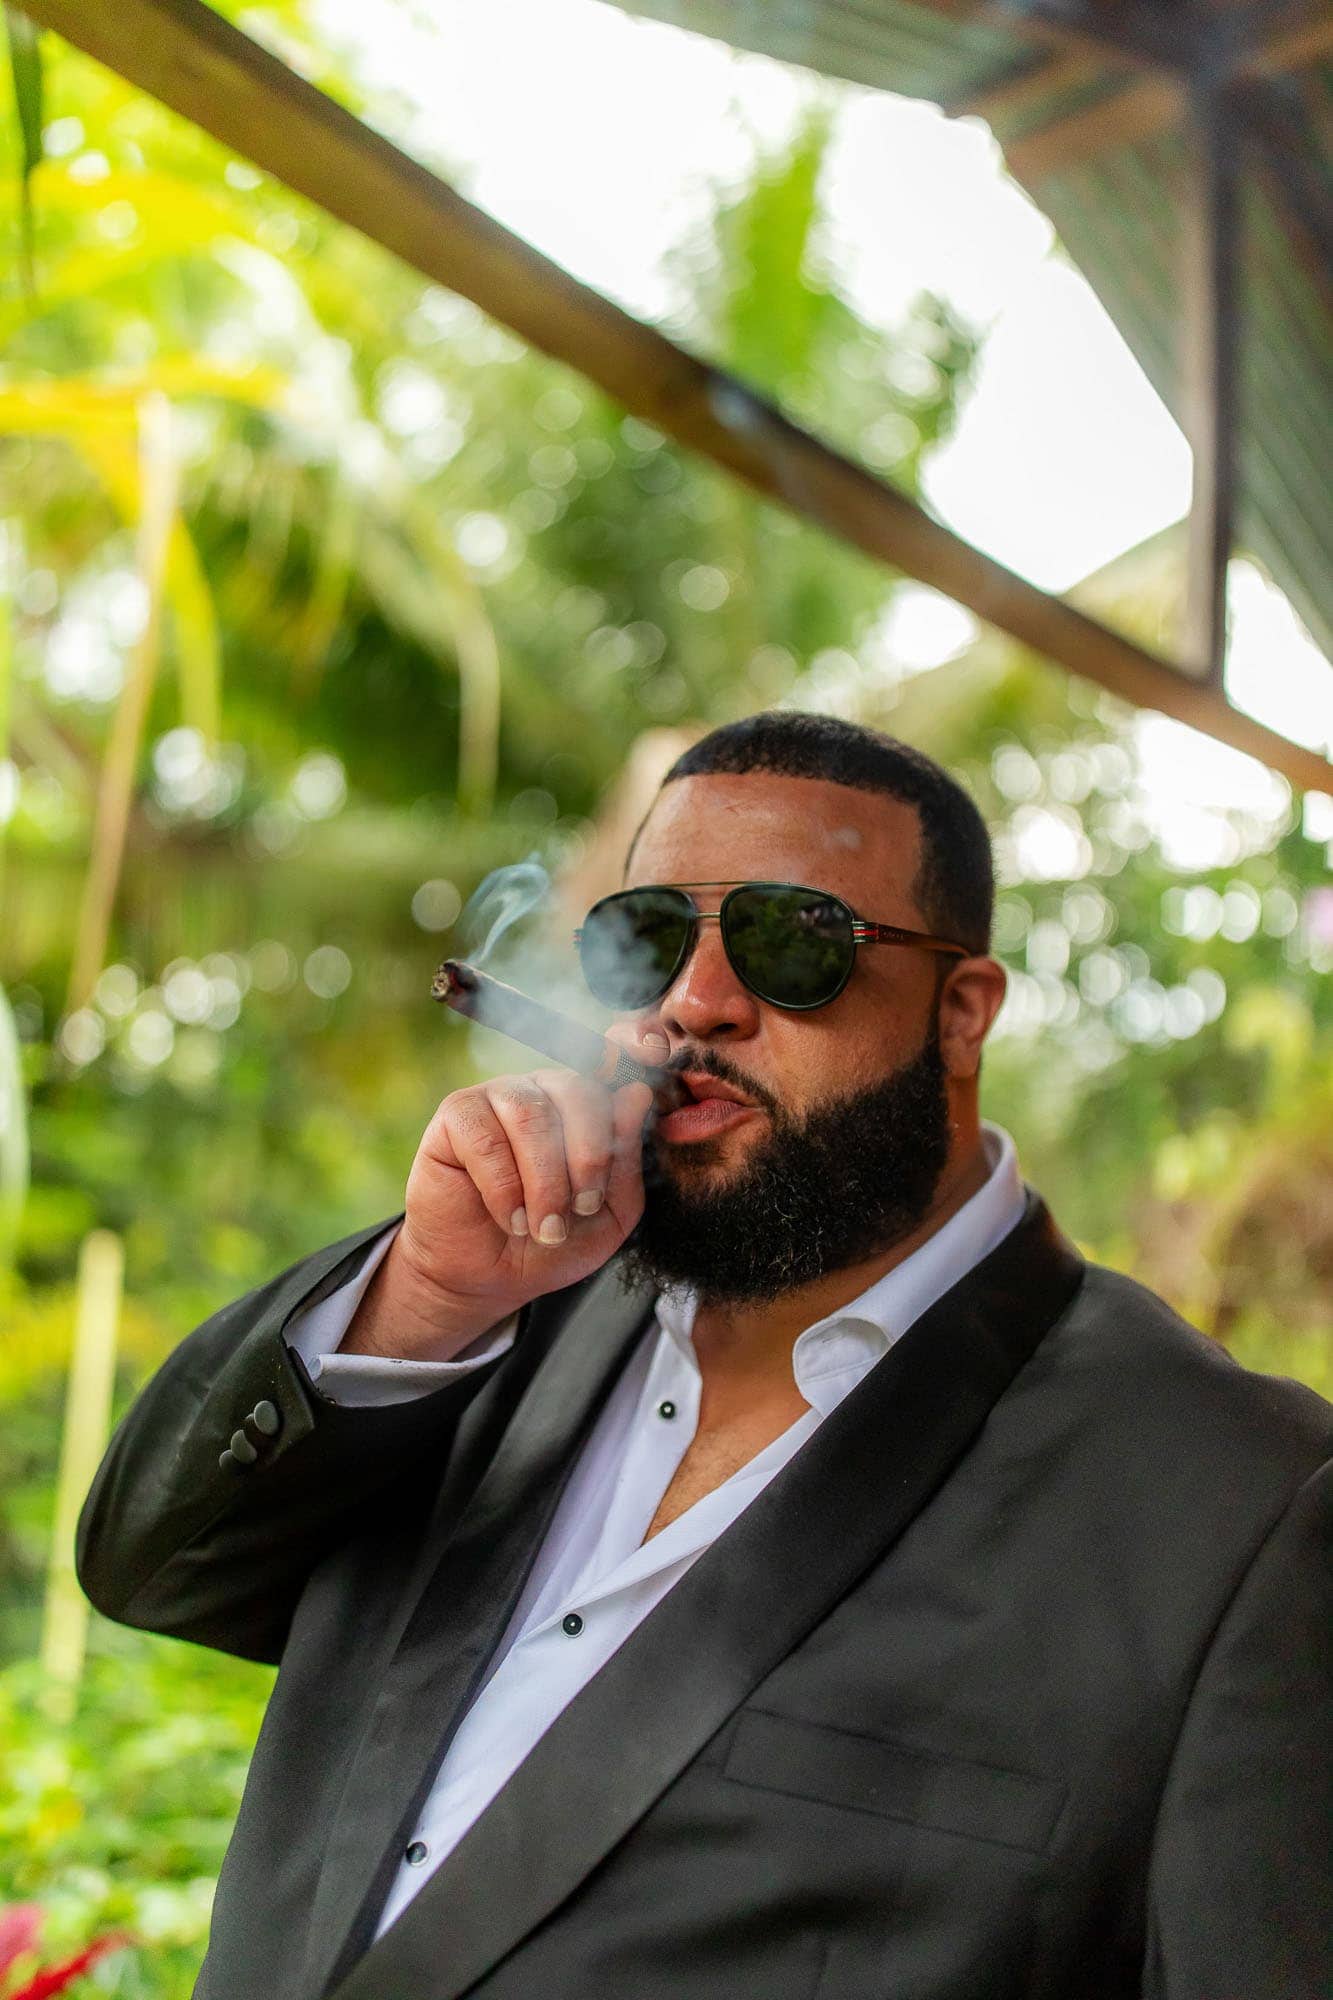 Groom smoking a cigar